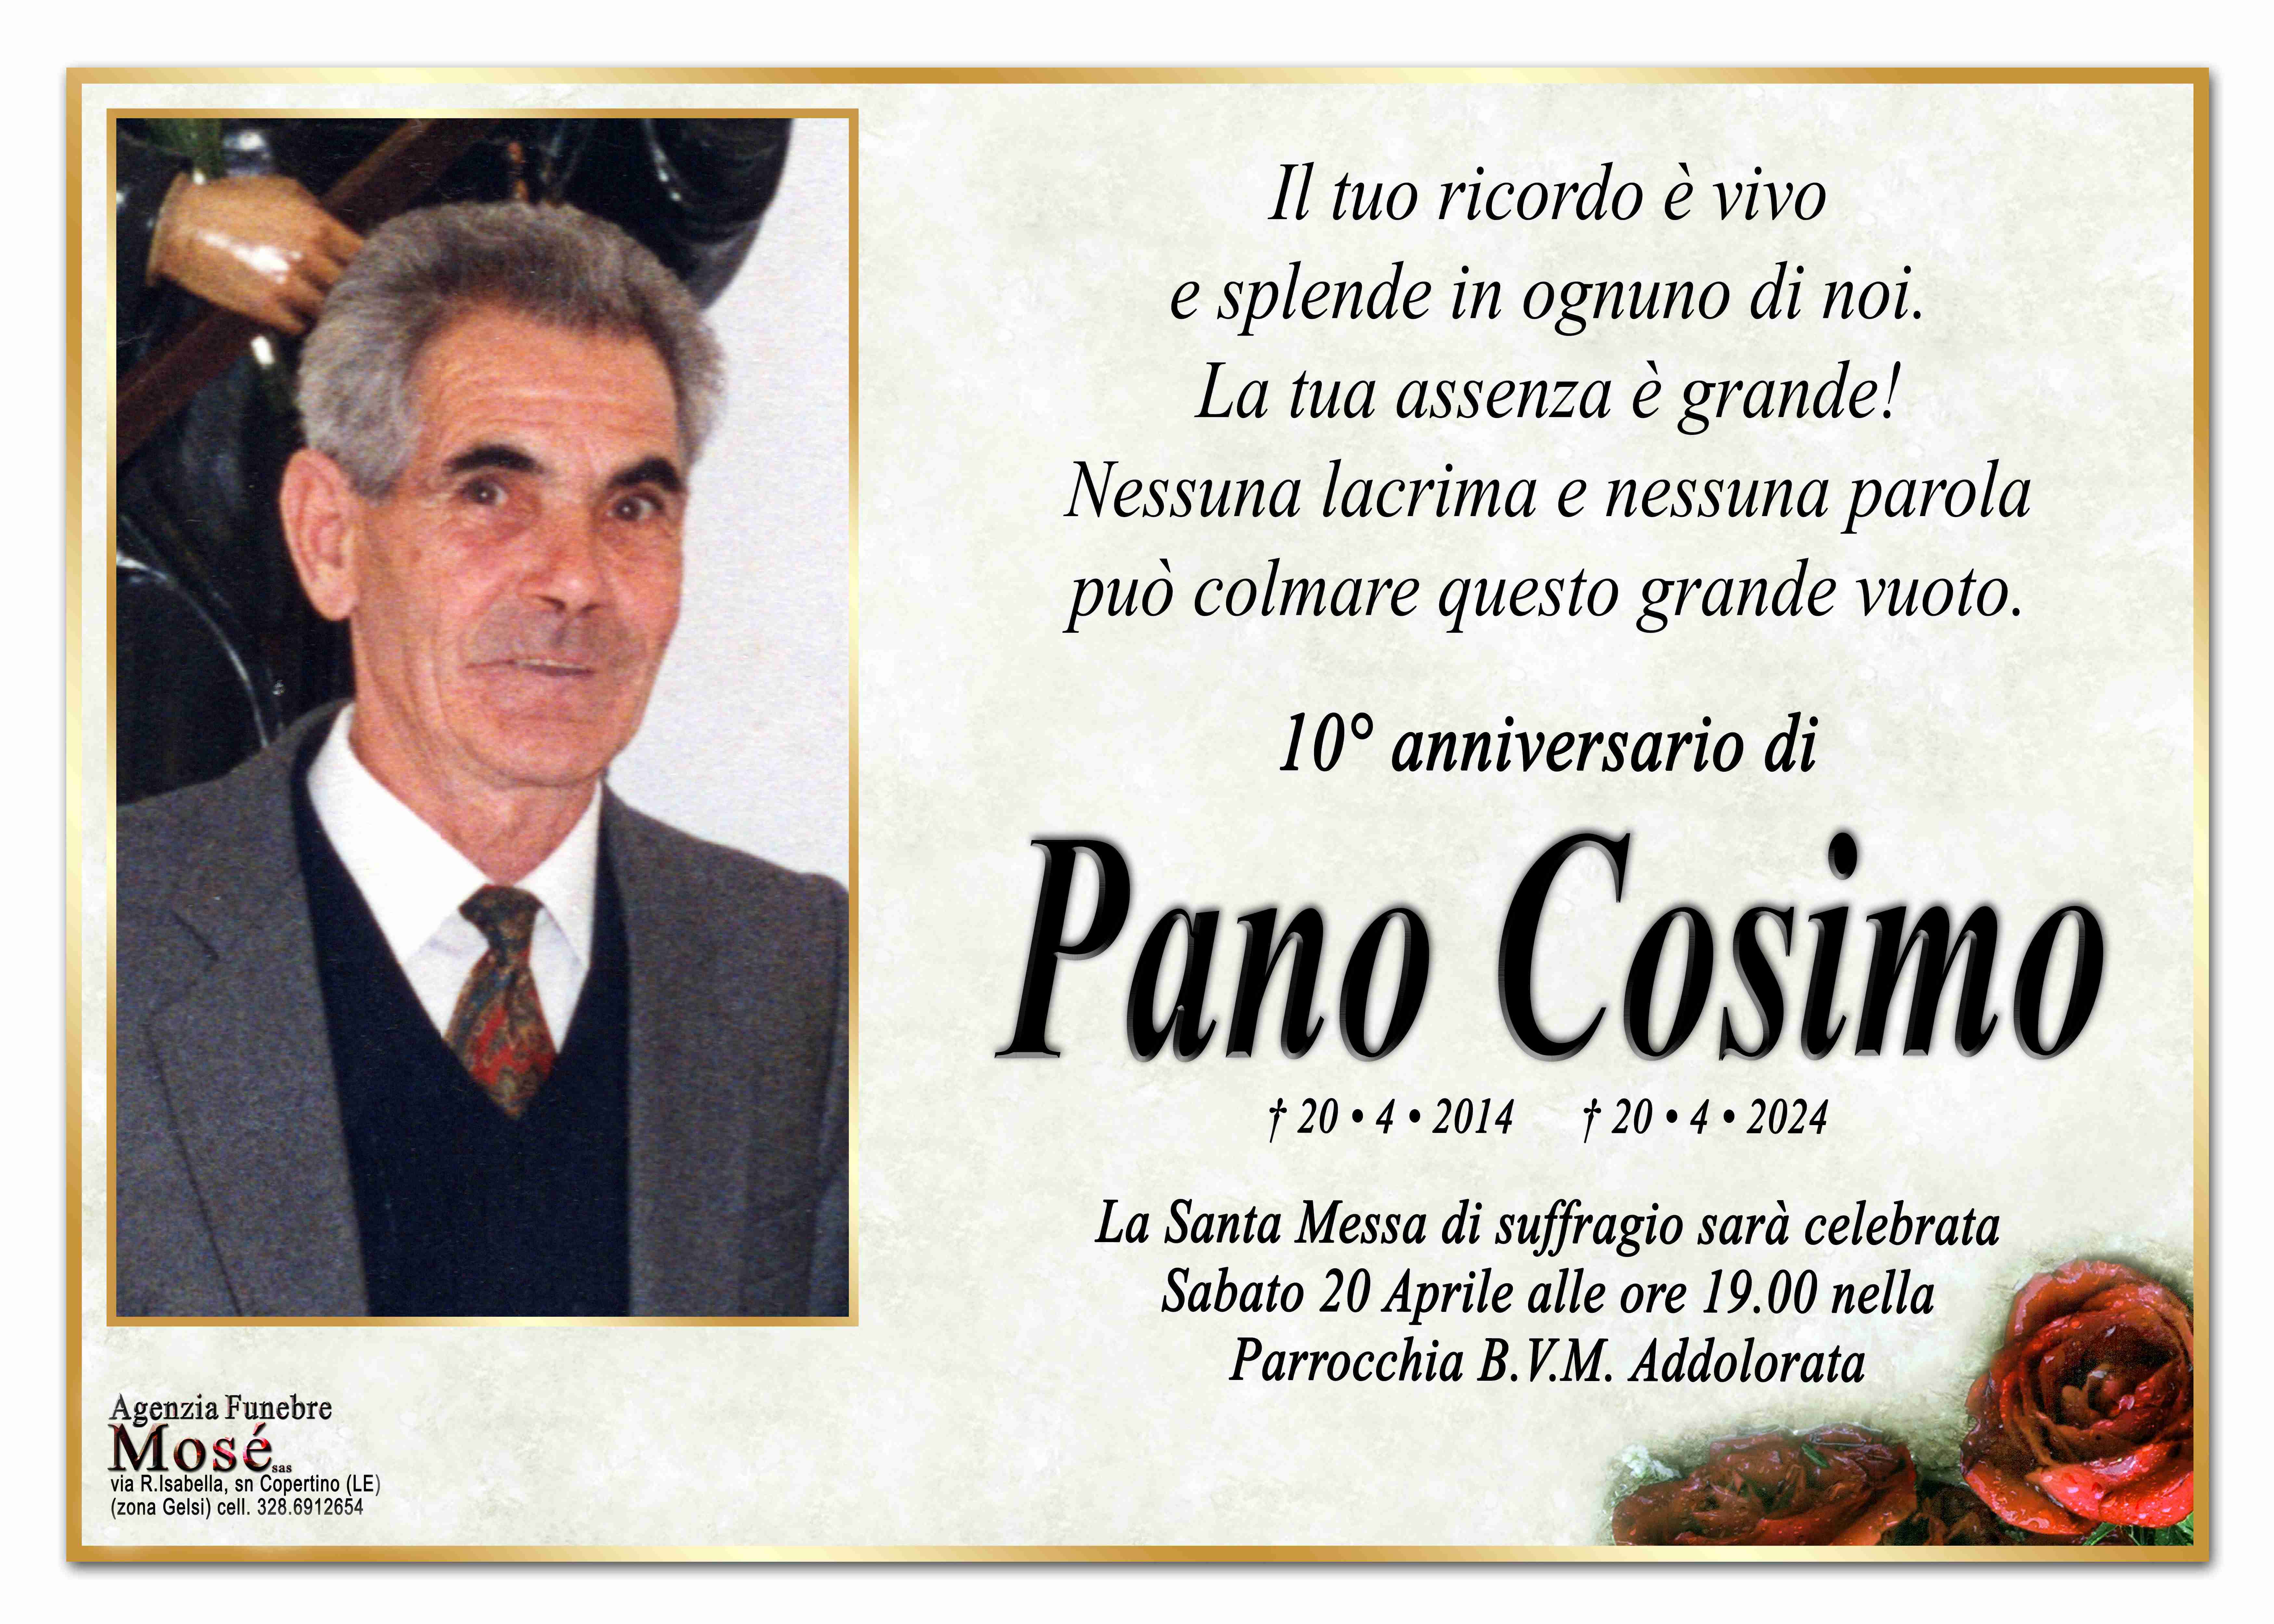 Cosimo Pano